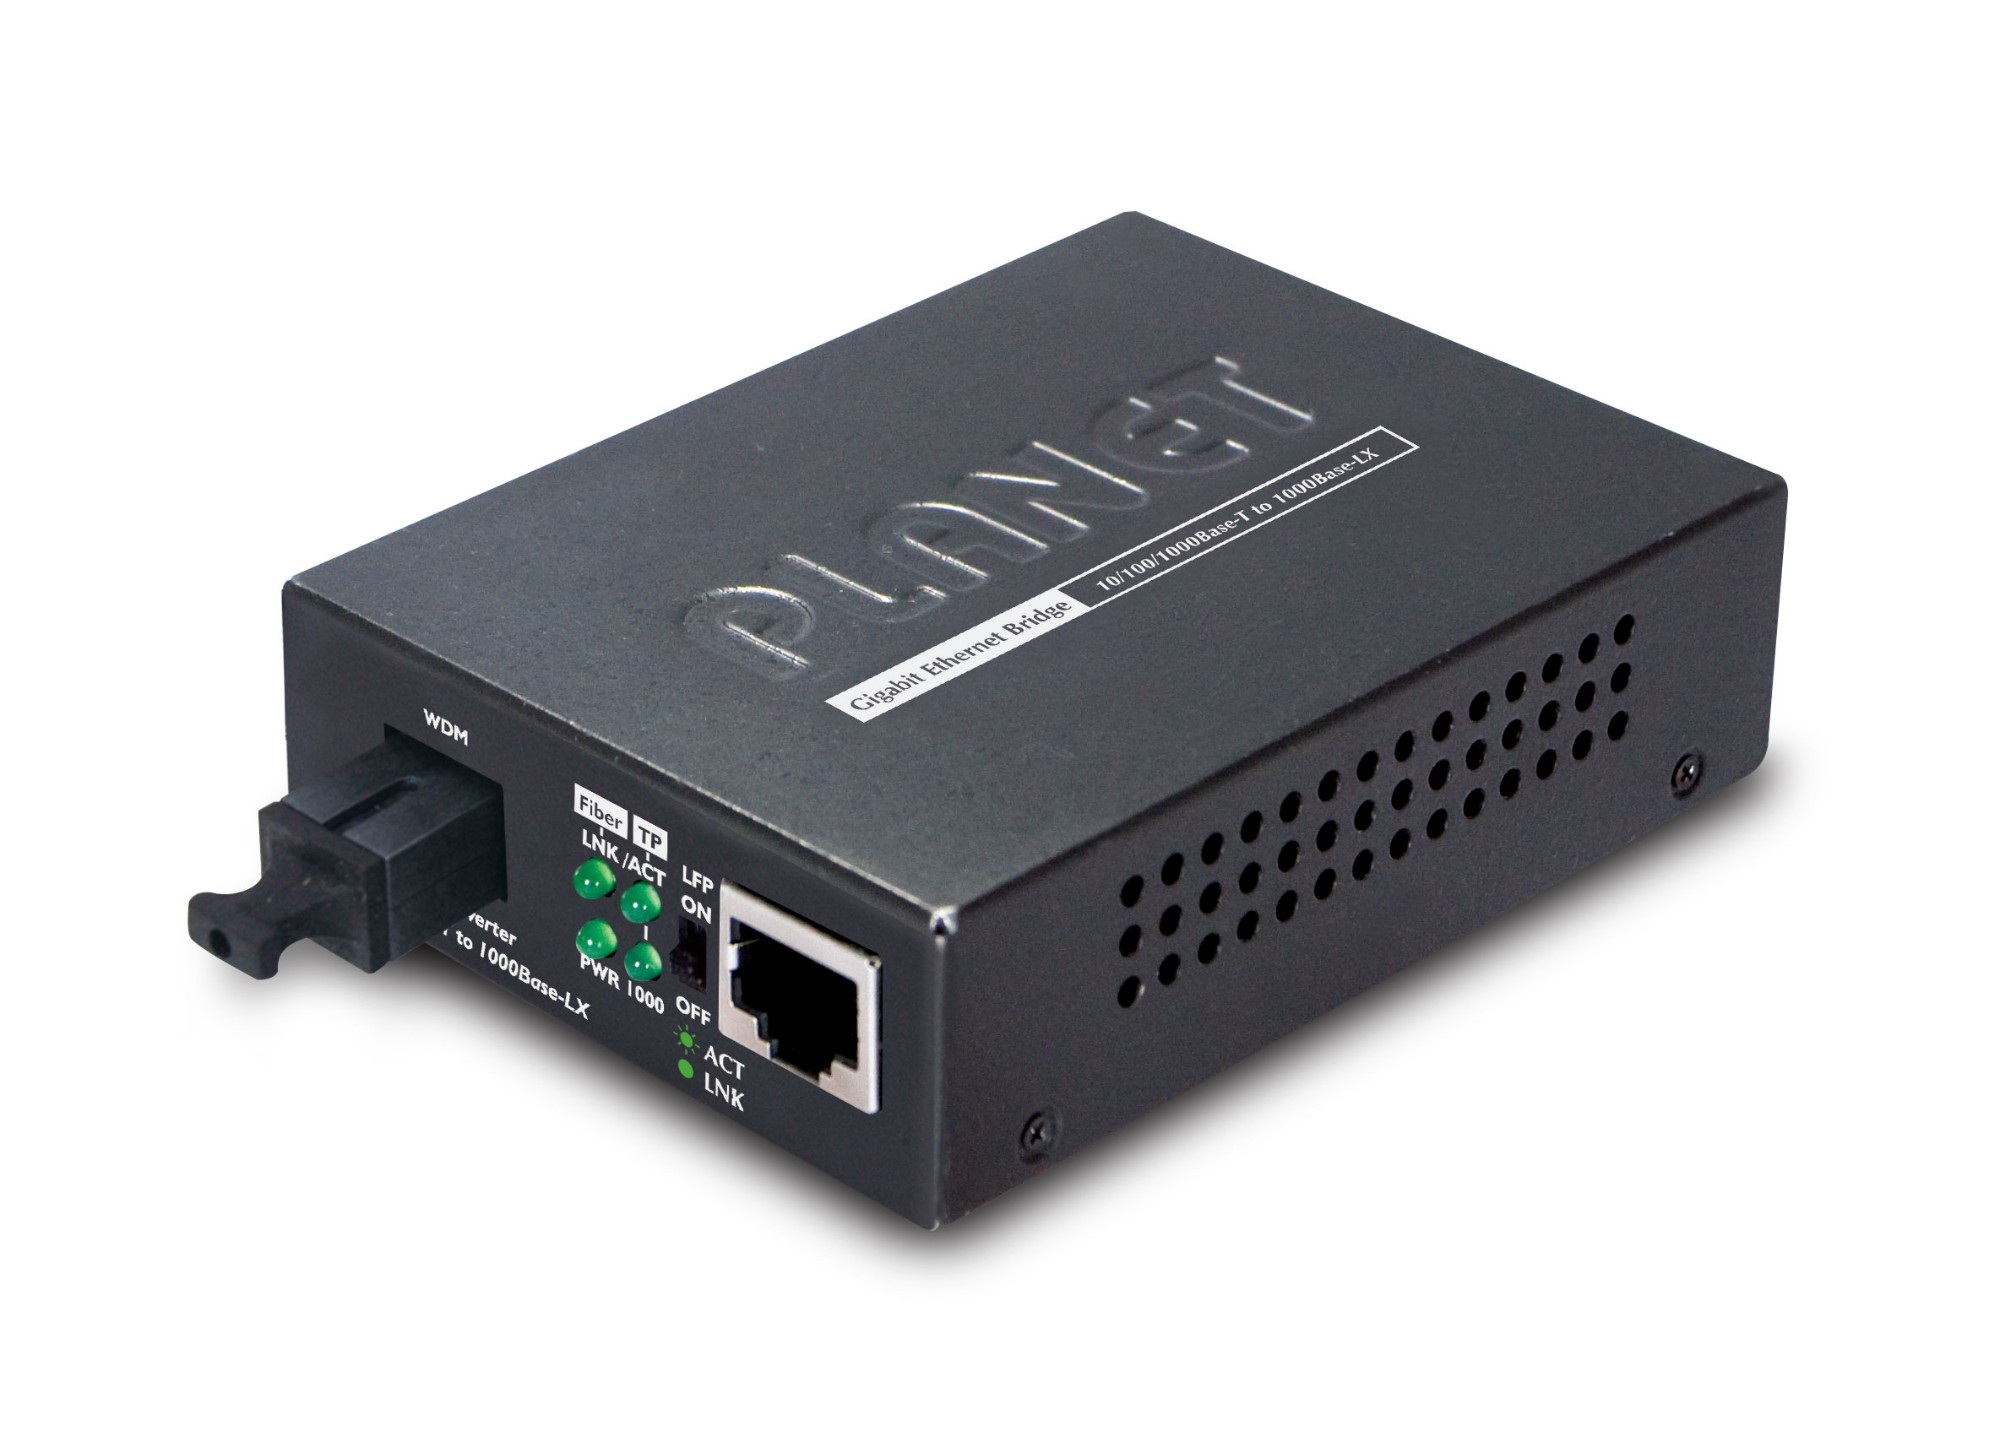 PLANET GT-806A15 network media converter 2000 Mbit/s 1310 nm Black